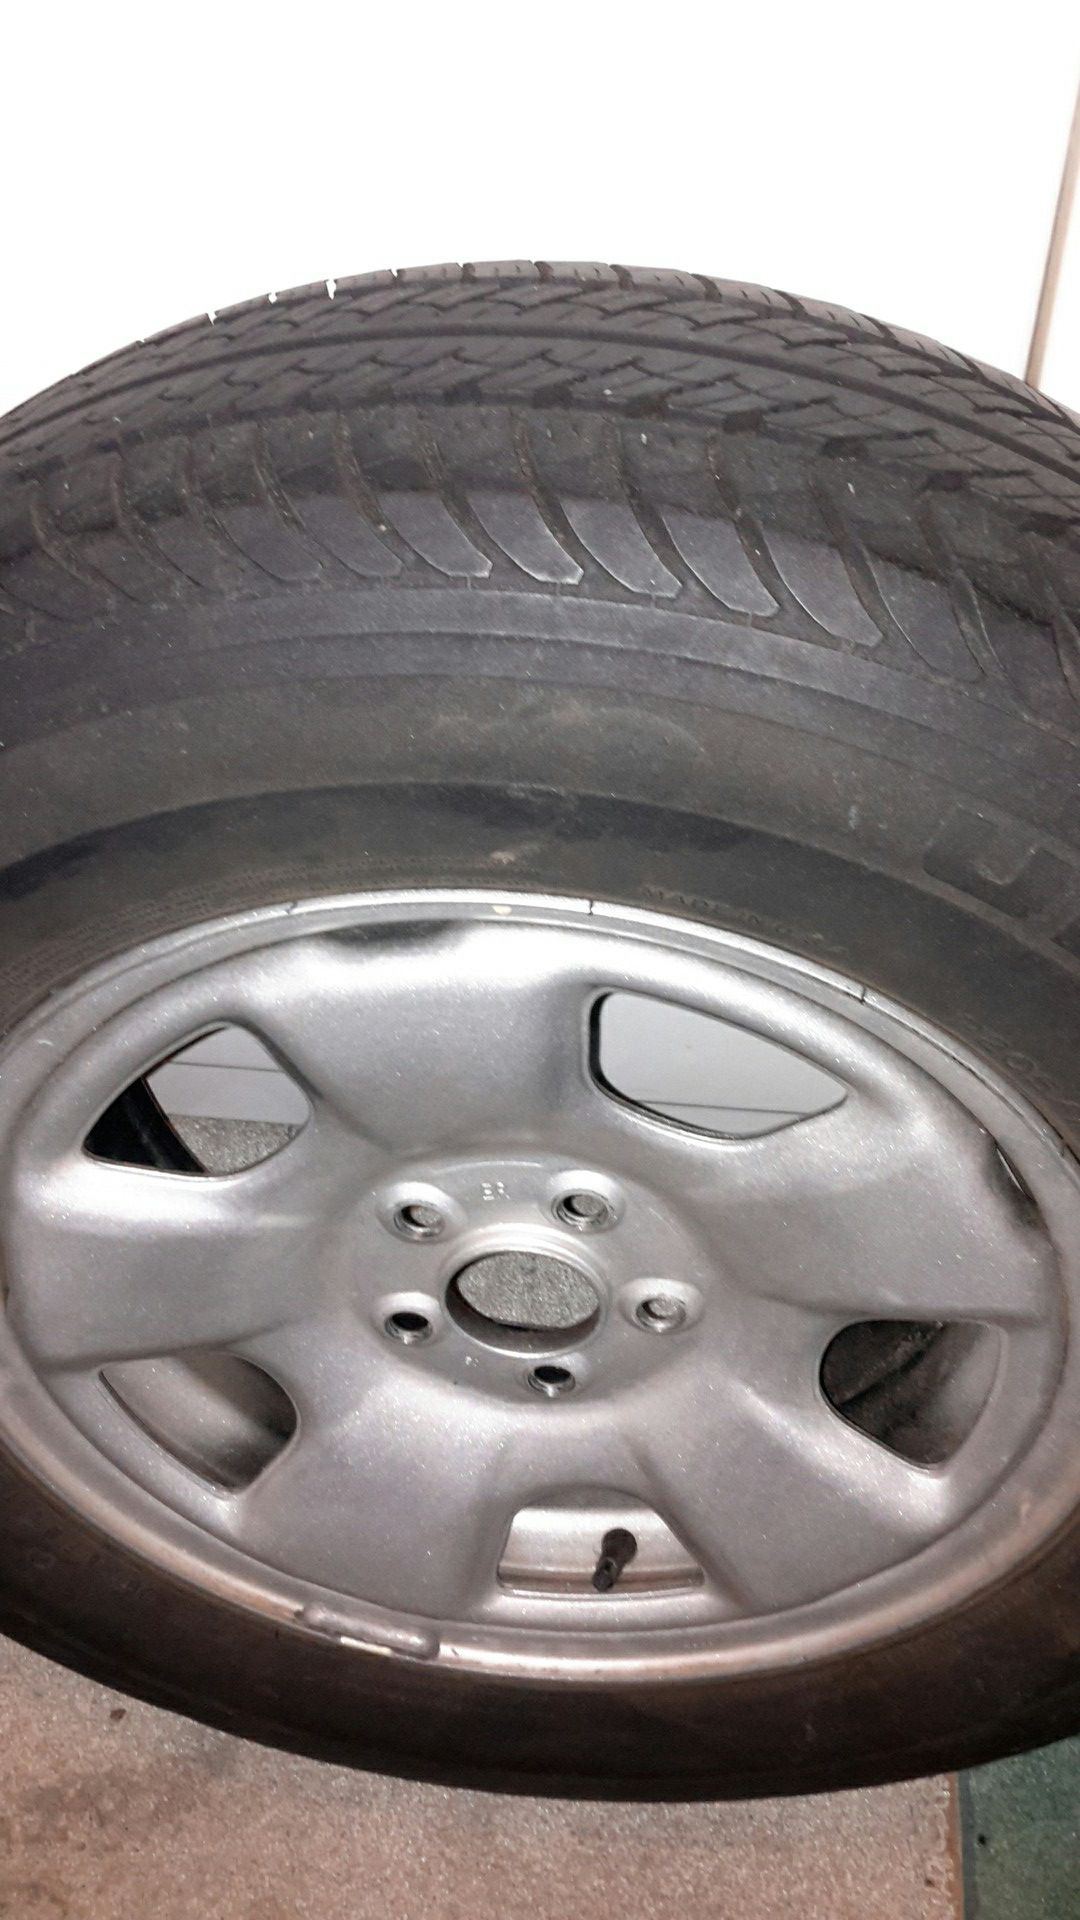 Uniroyal rim and tire